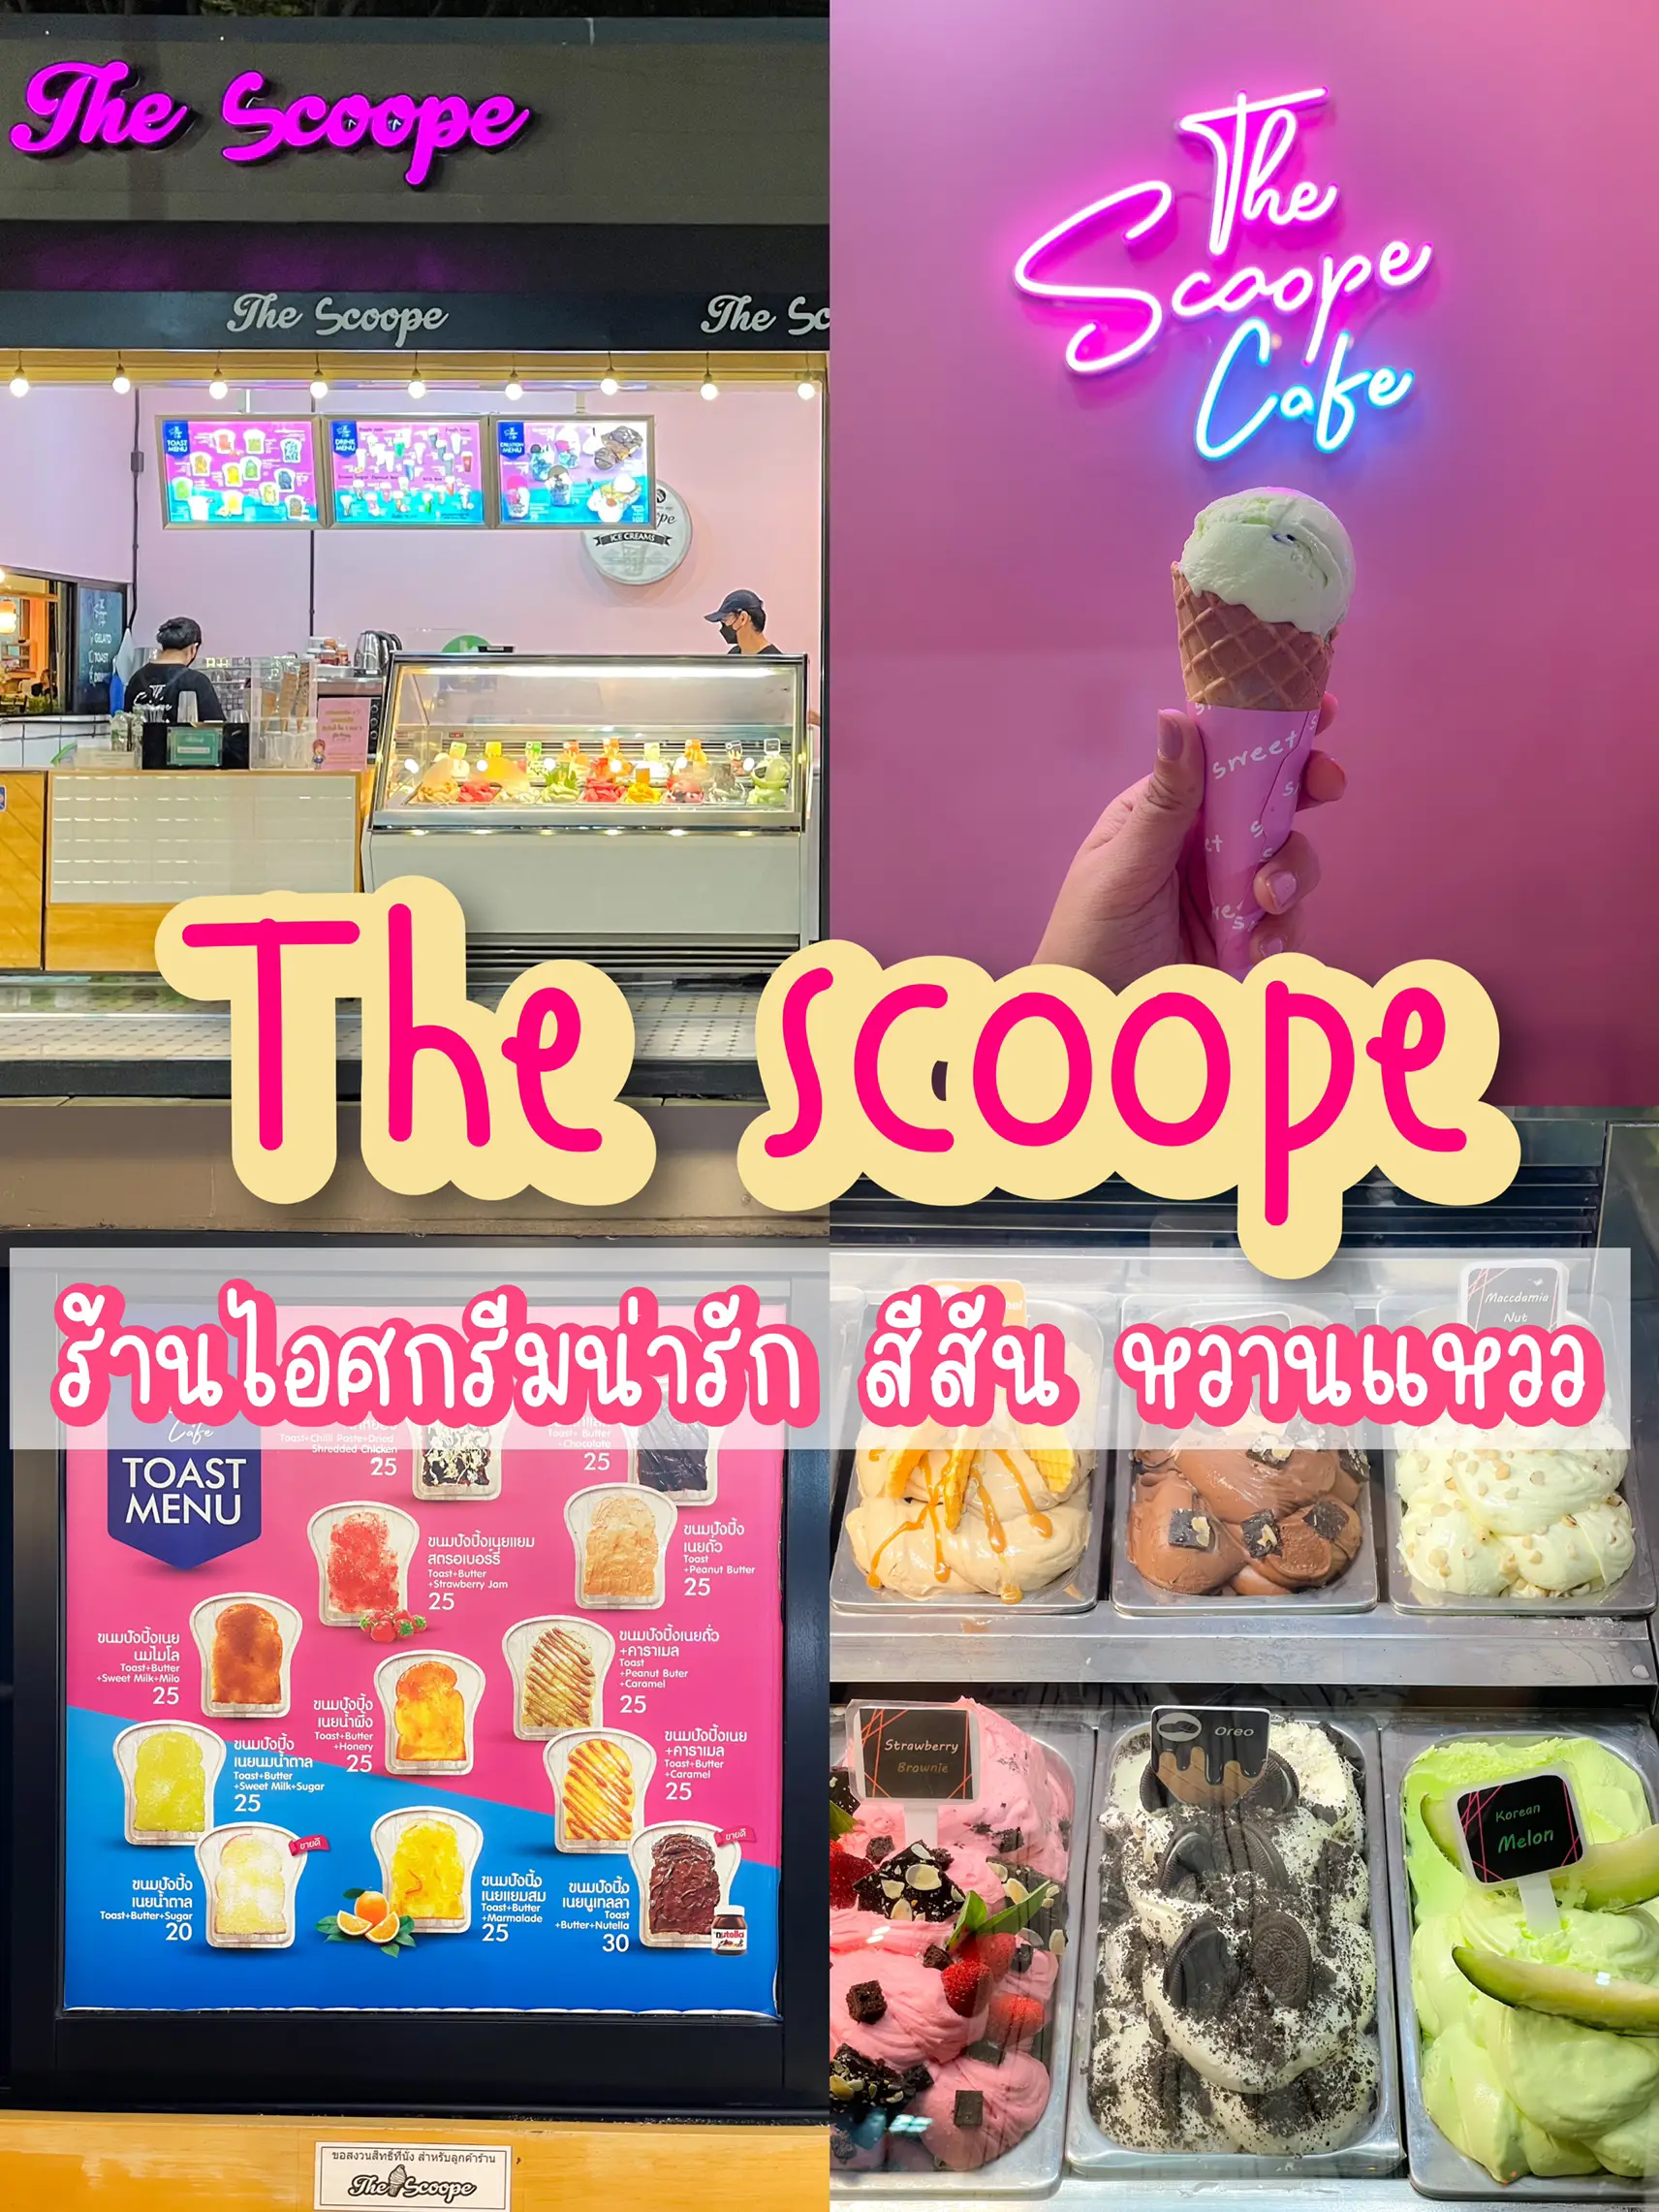 Scoope Ice cream